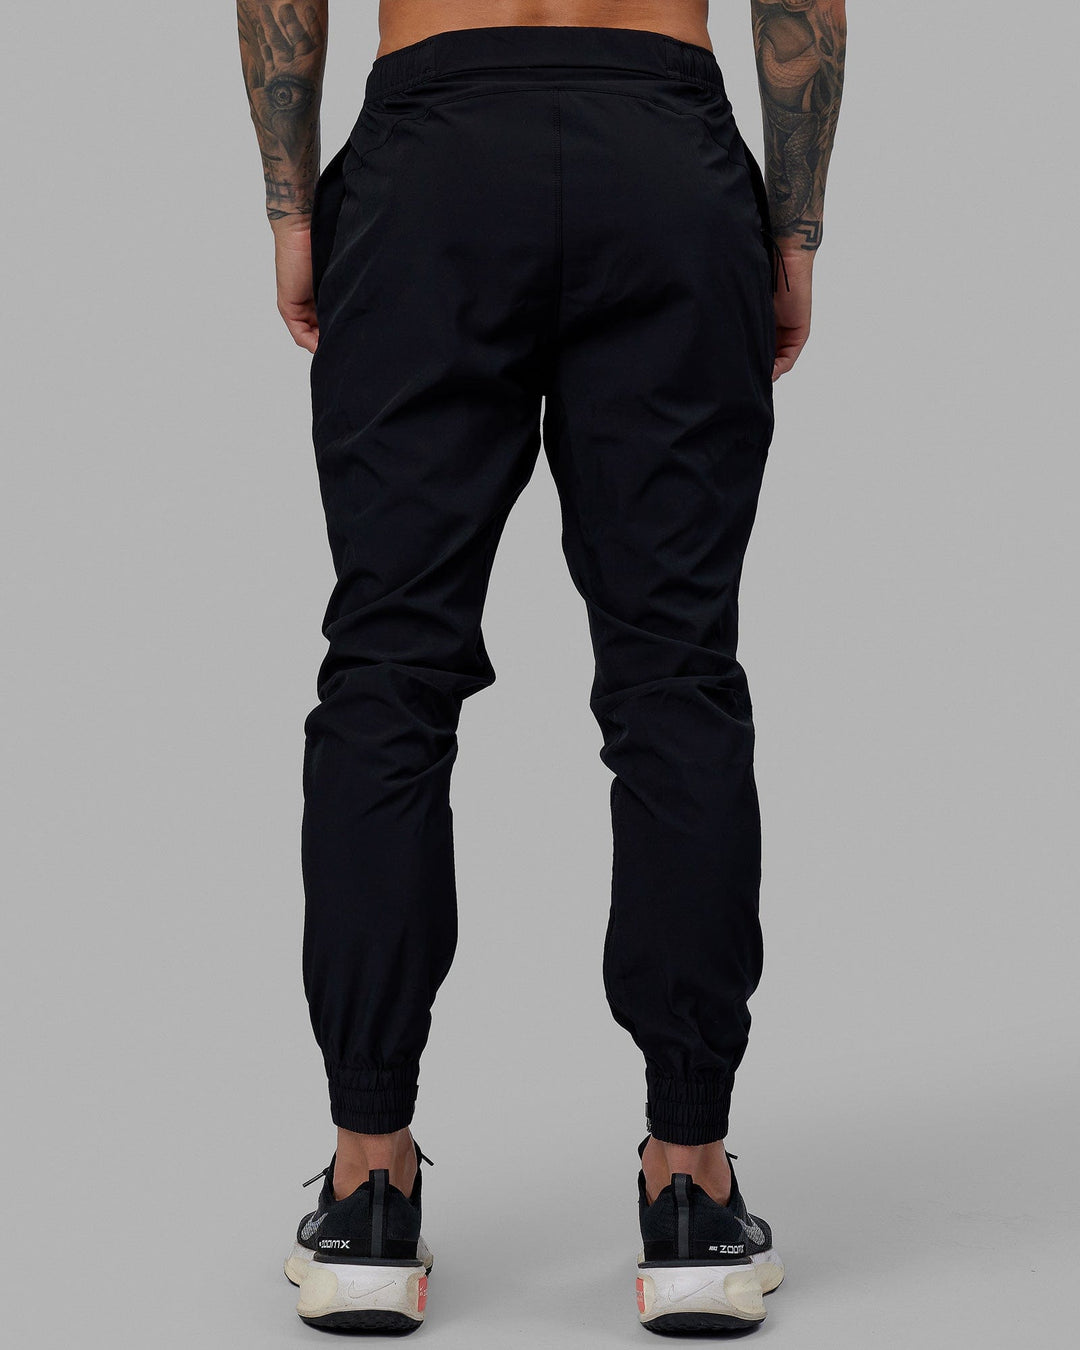 Man wearing Warm Up Zip Cuff Performance Pant - Black